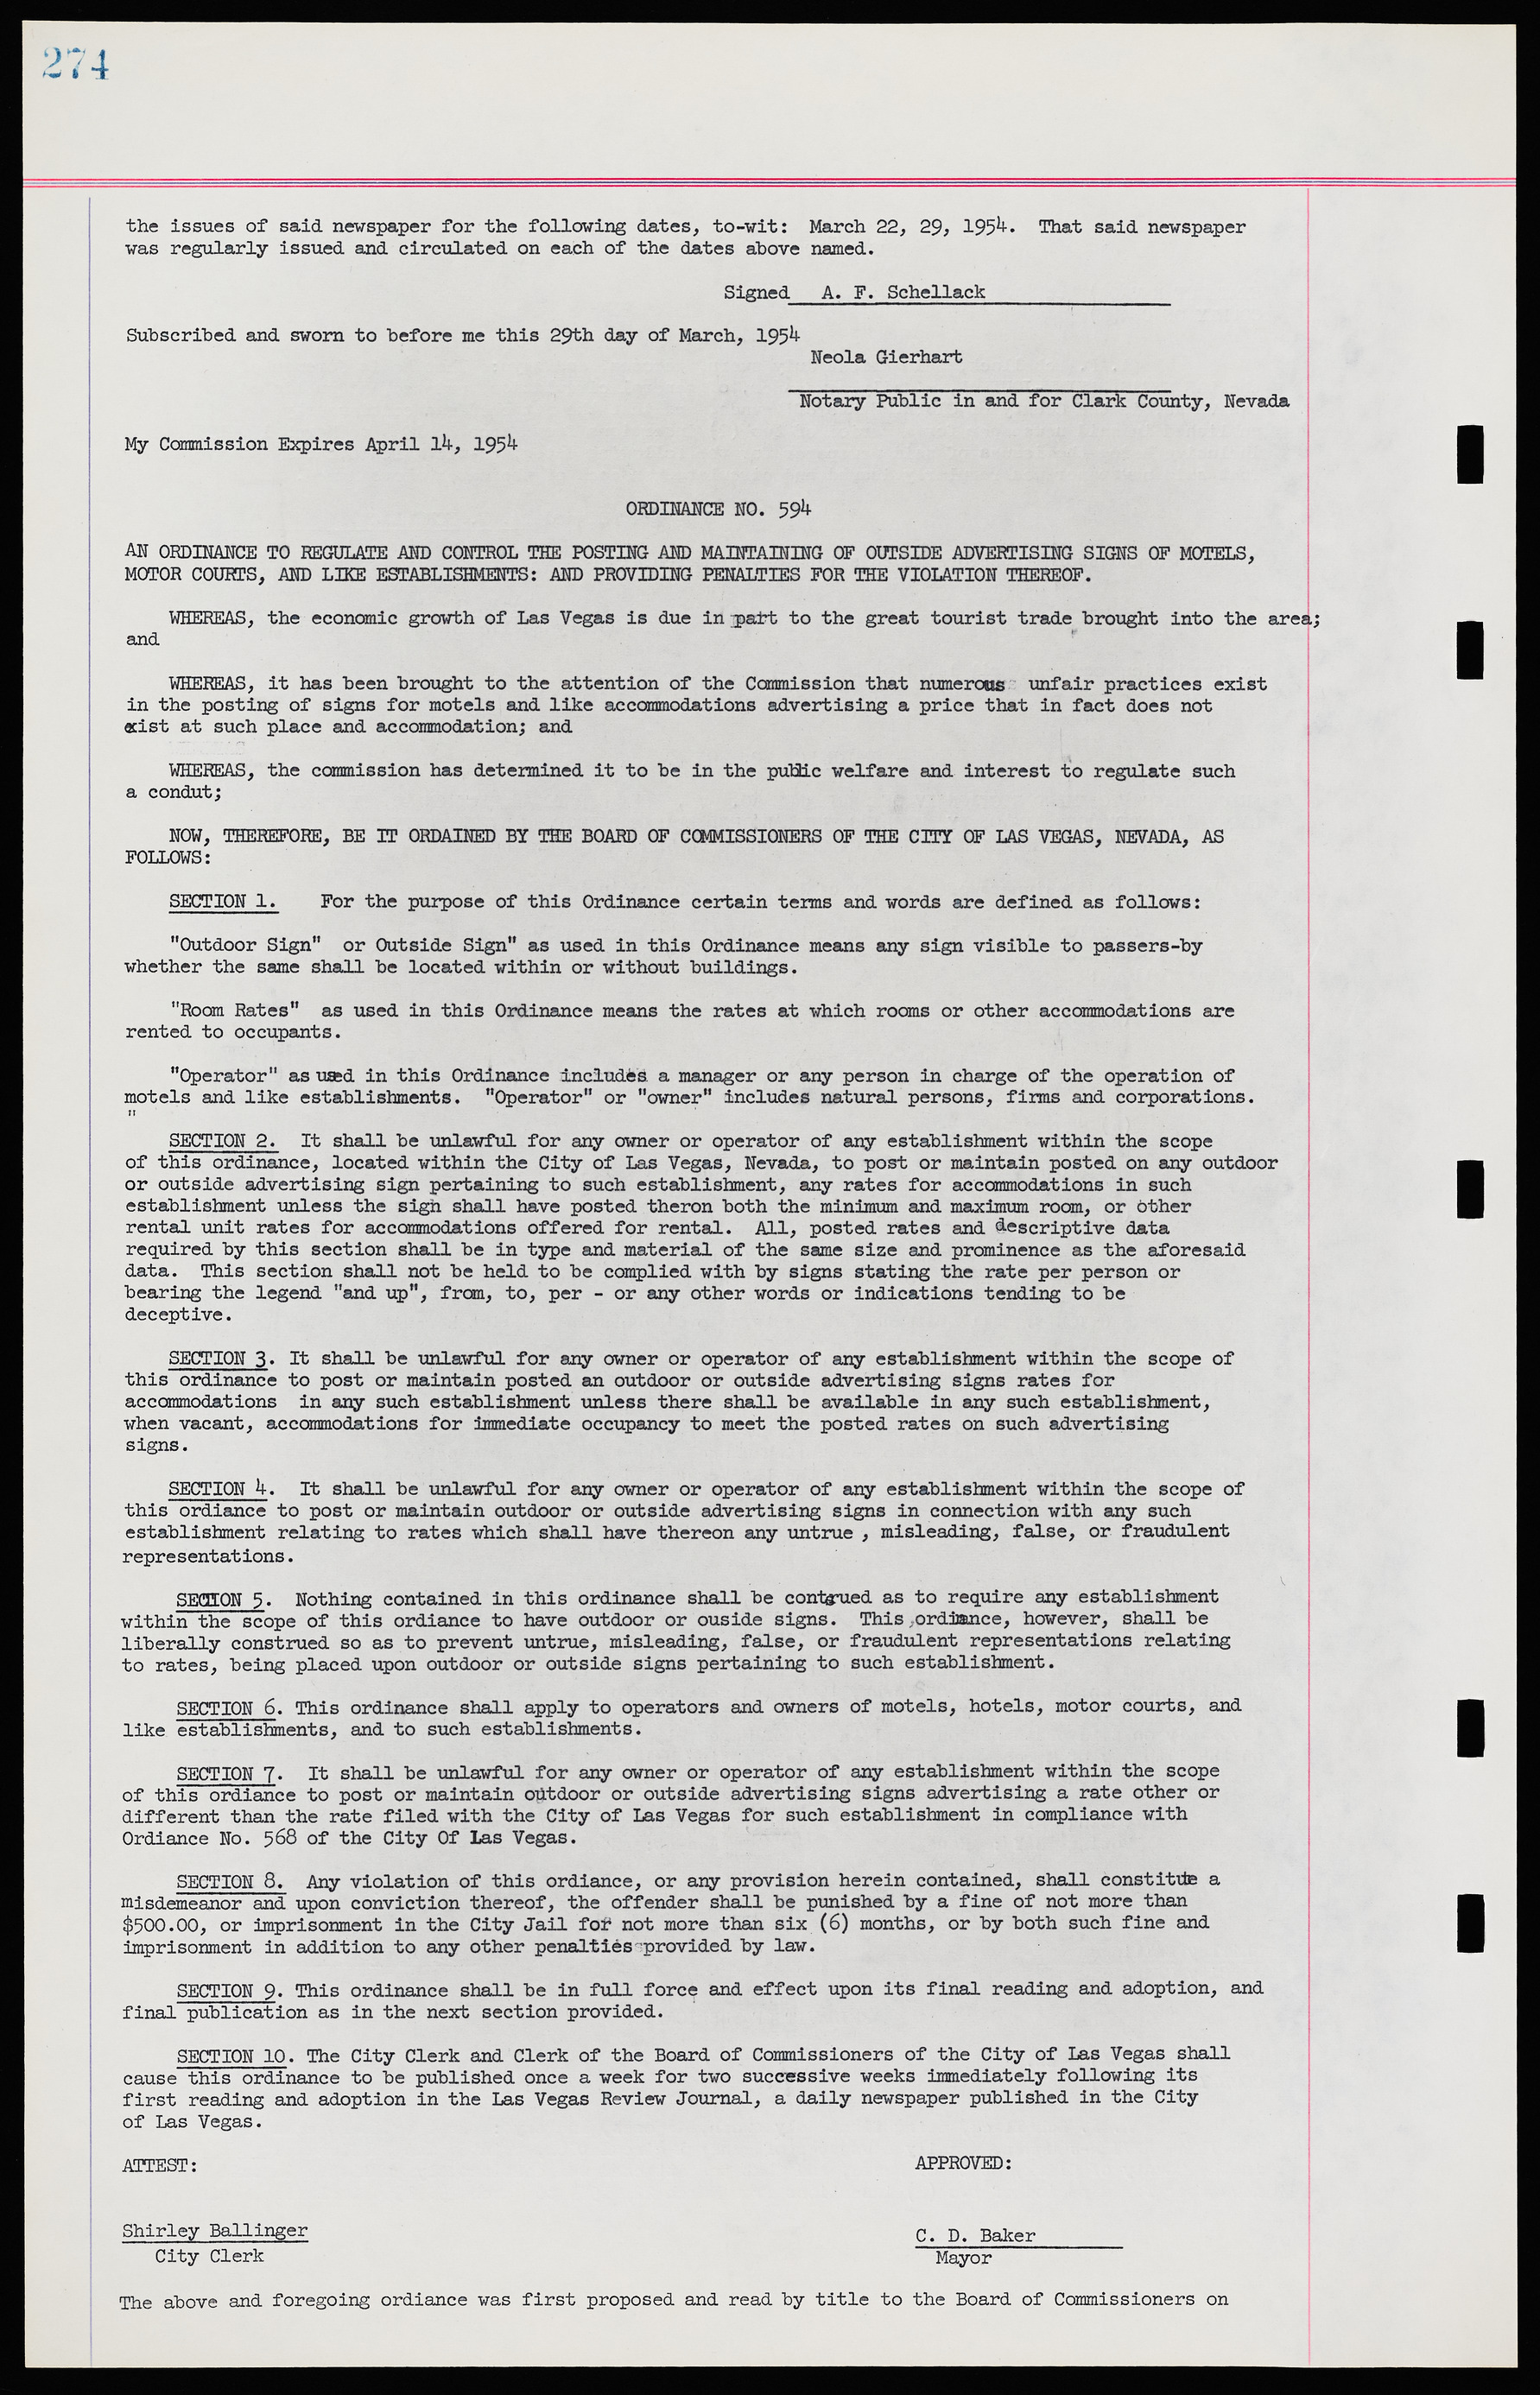 Las Vegas City Ordinances, November 13, 1950 to August 6, 1958, lvc000015-282